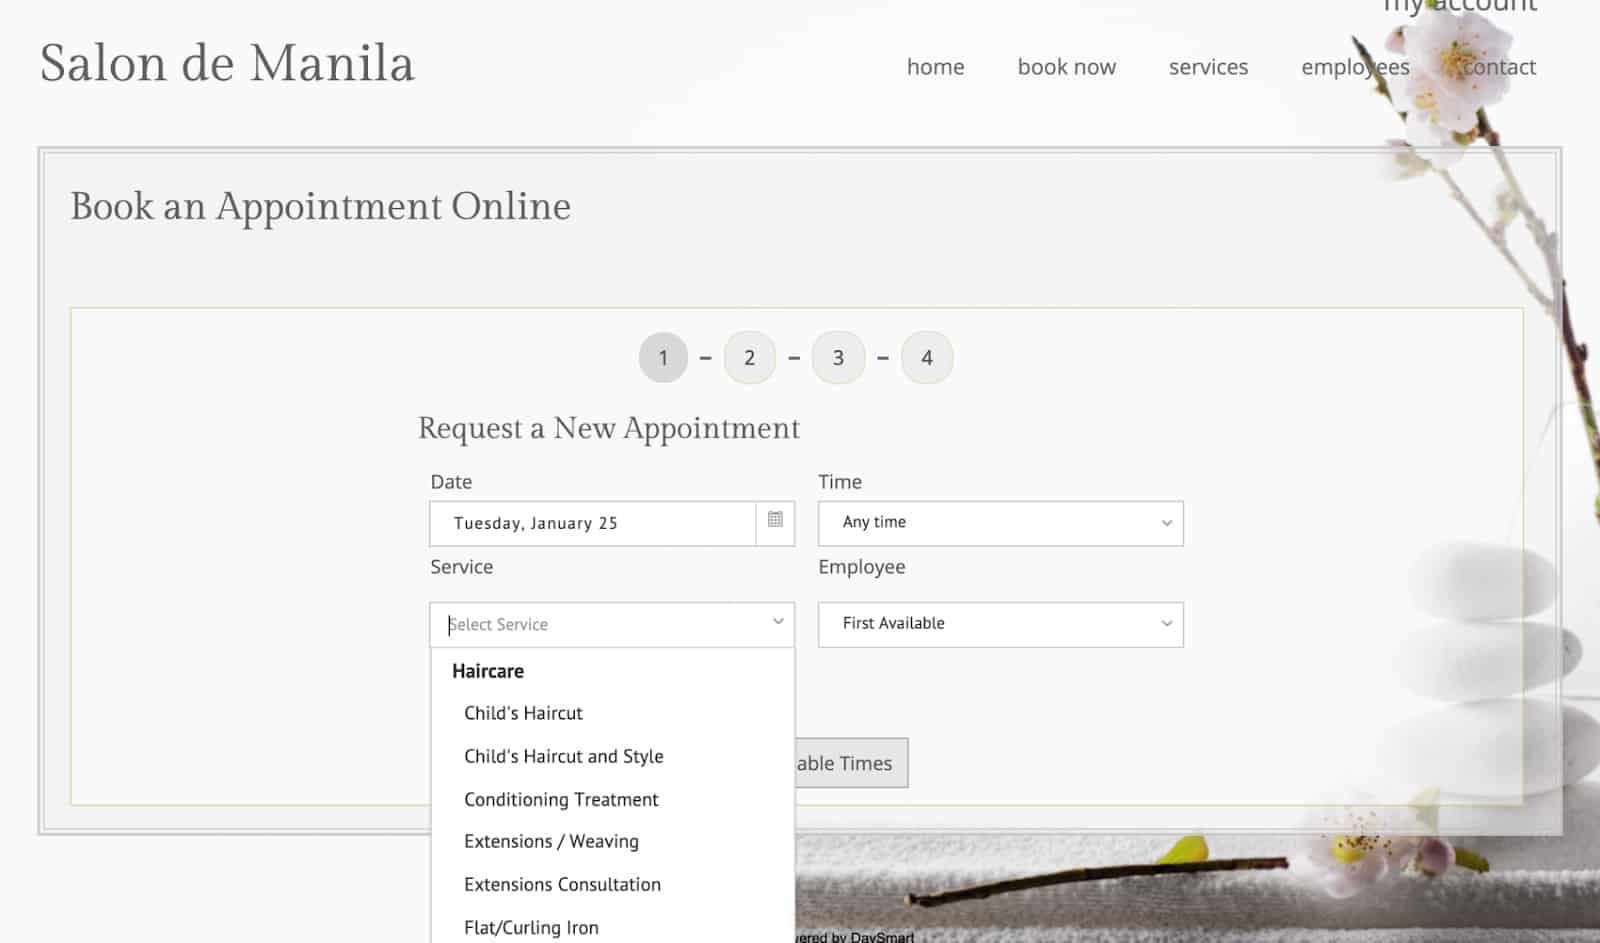 Salon de Manila request a new appointment page.